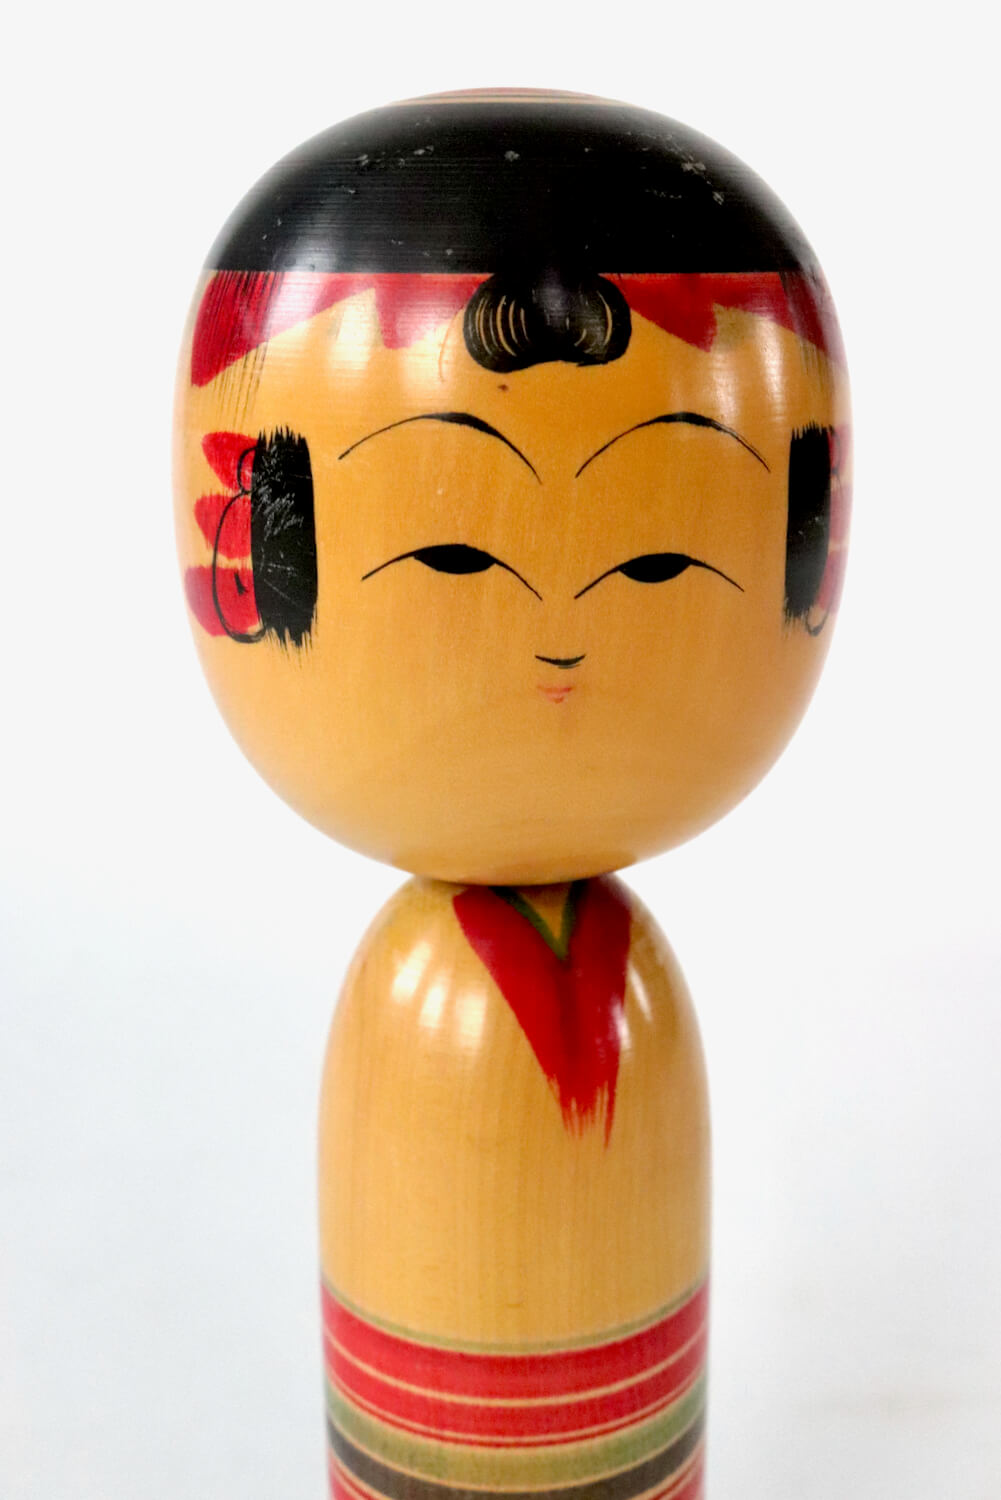 Japanpuppe aus Holz, handbemalt, 26 cm